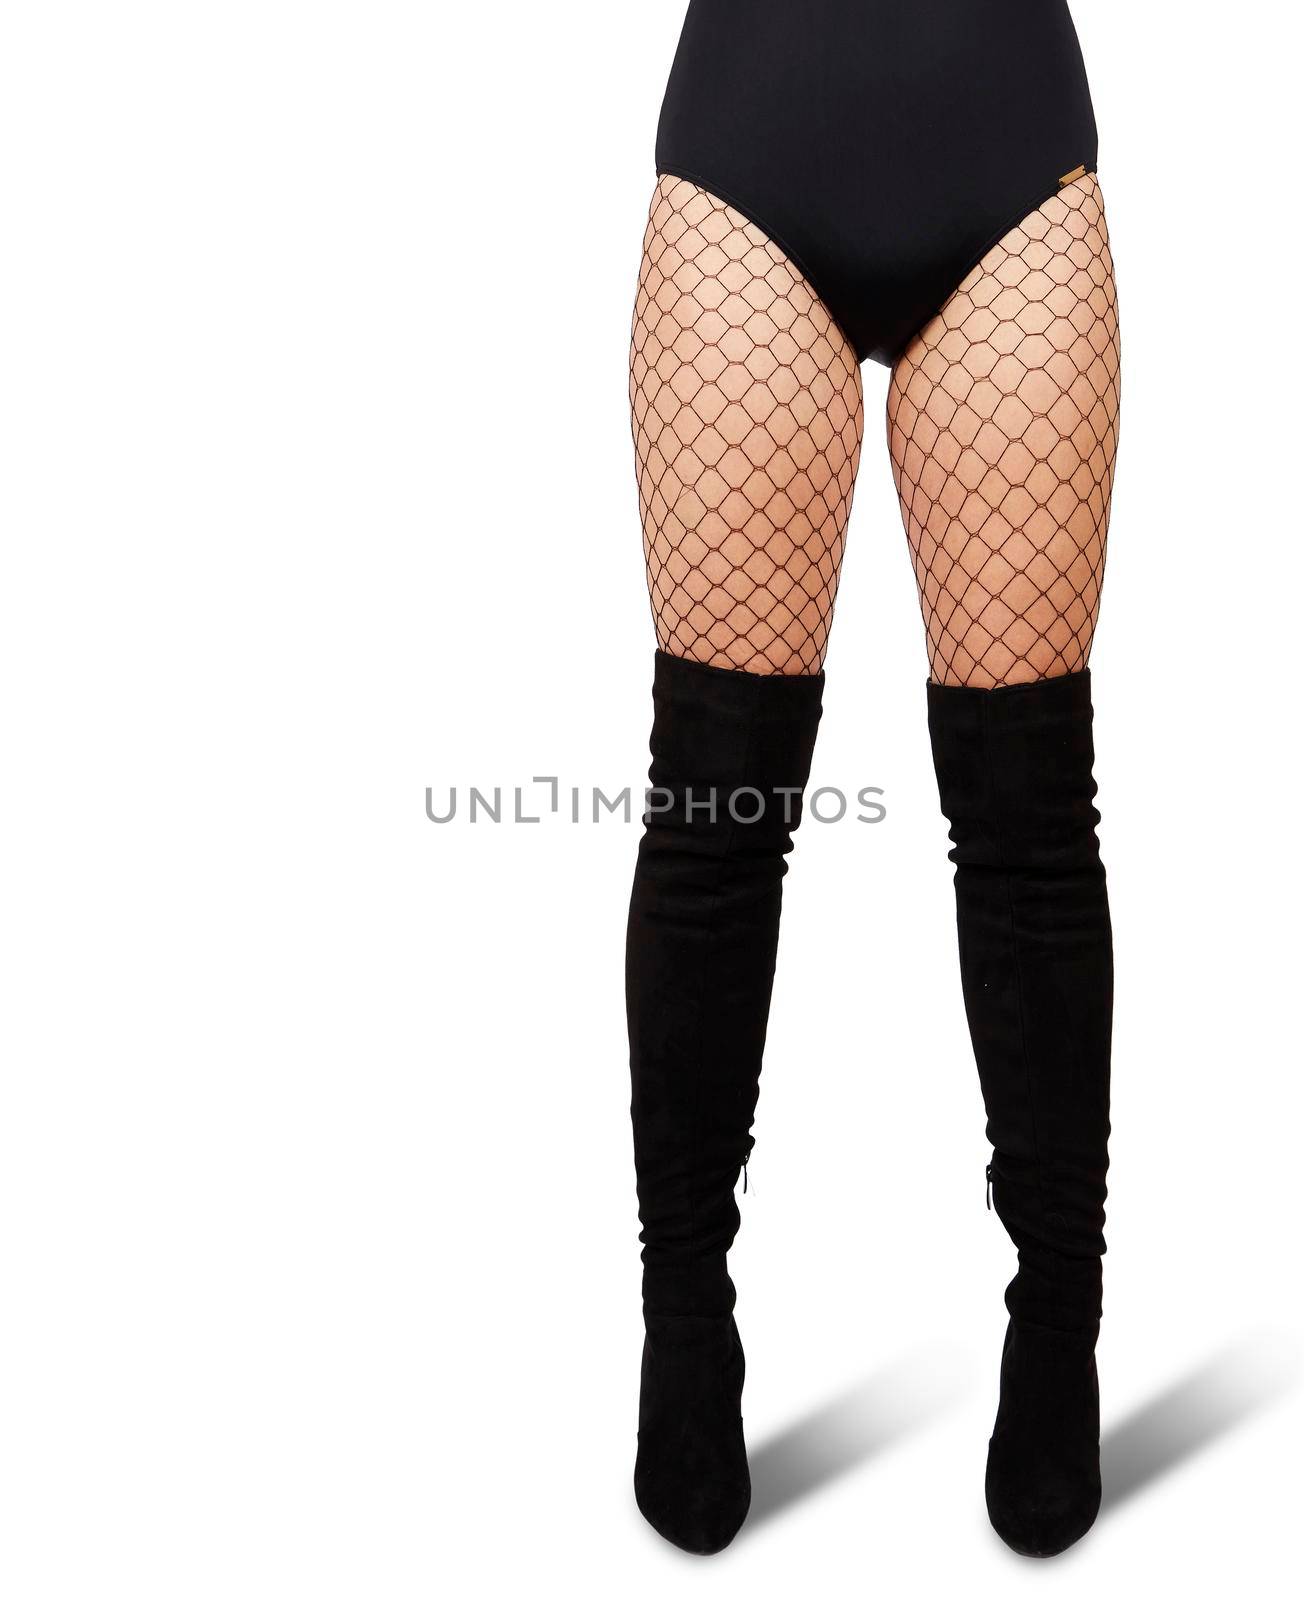 slender female legs in mesh tights and black boots by raddnatt